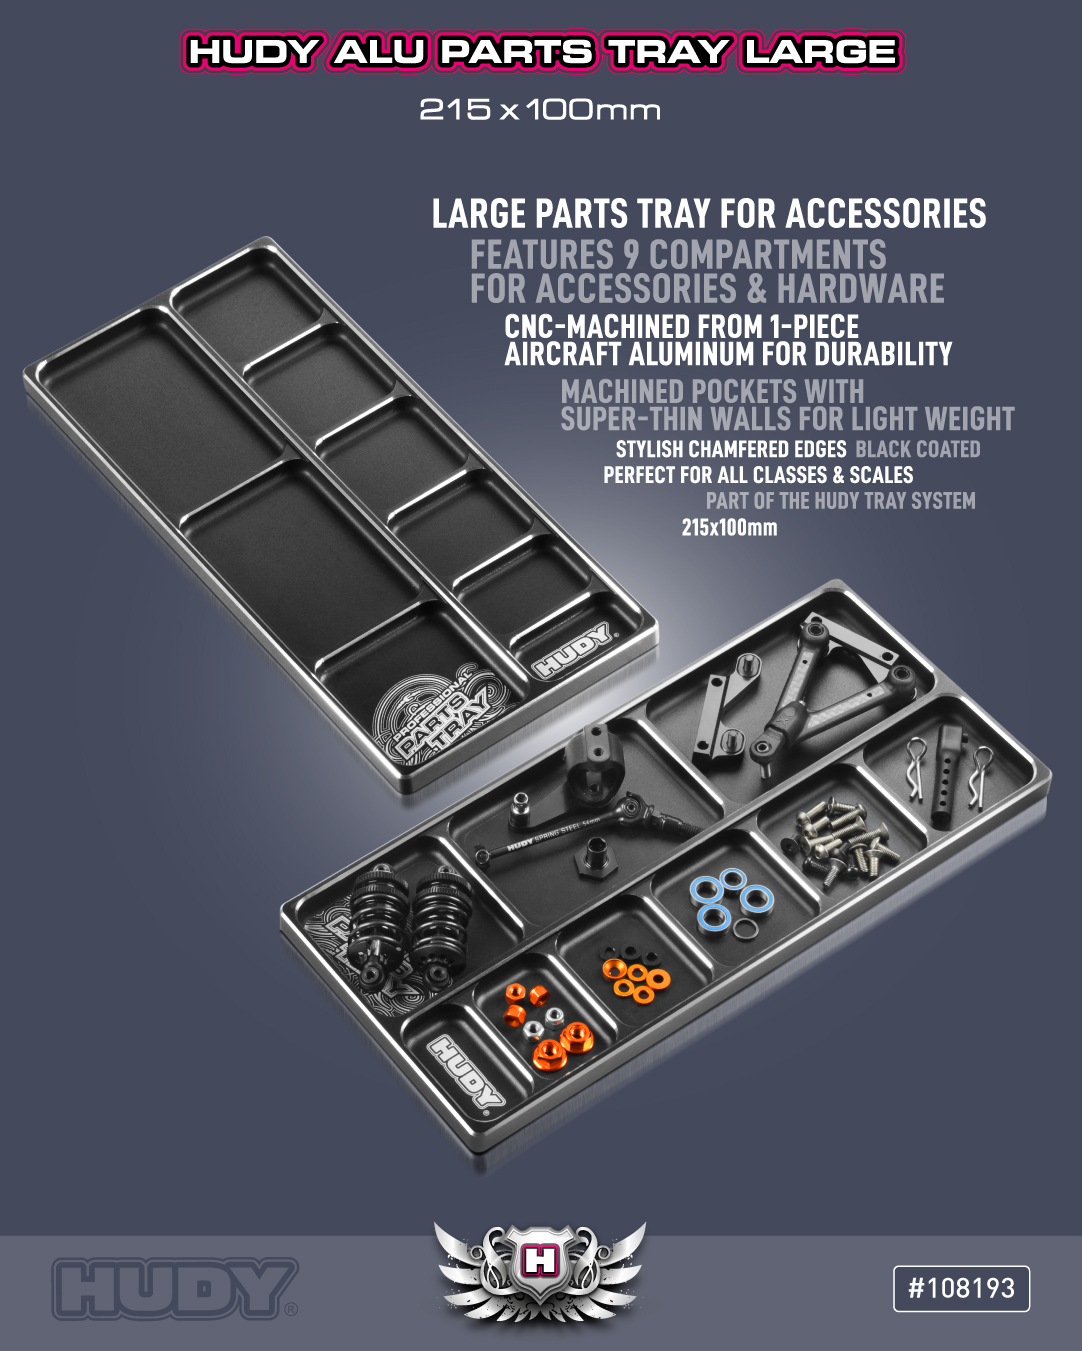 HUDY Alu Parts Tray Large 215x100mm